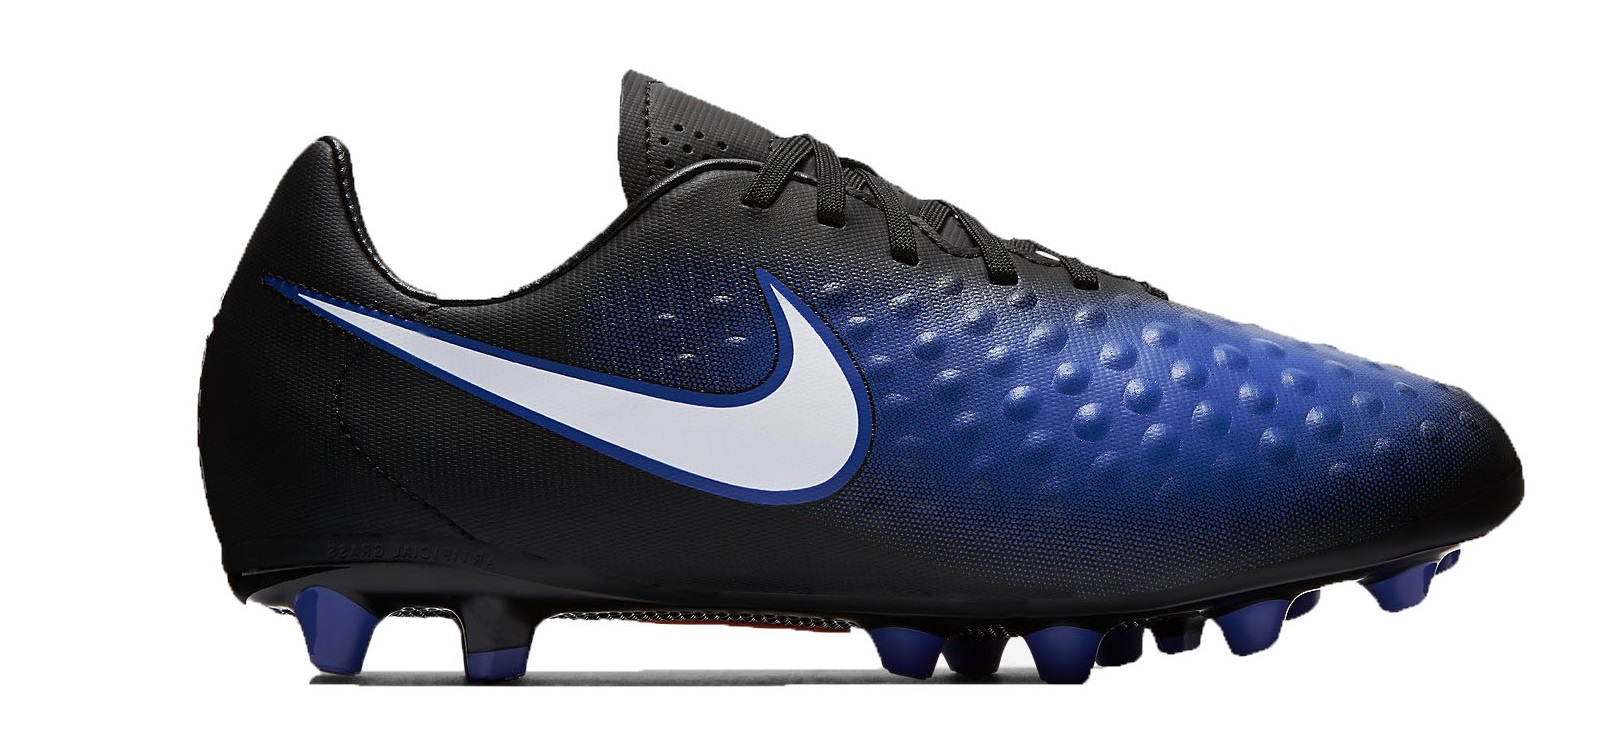 Las botas de fútbol Nike Magista Opus II AG Pro colore negro - Nike - SportIT.com